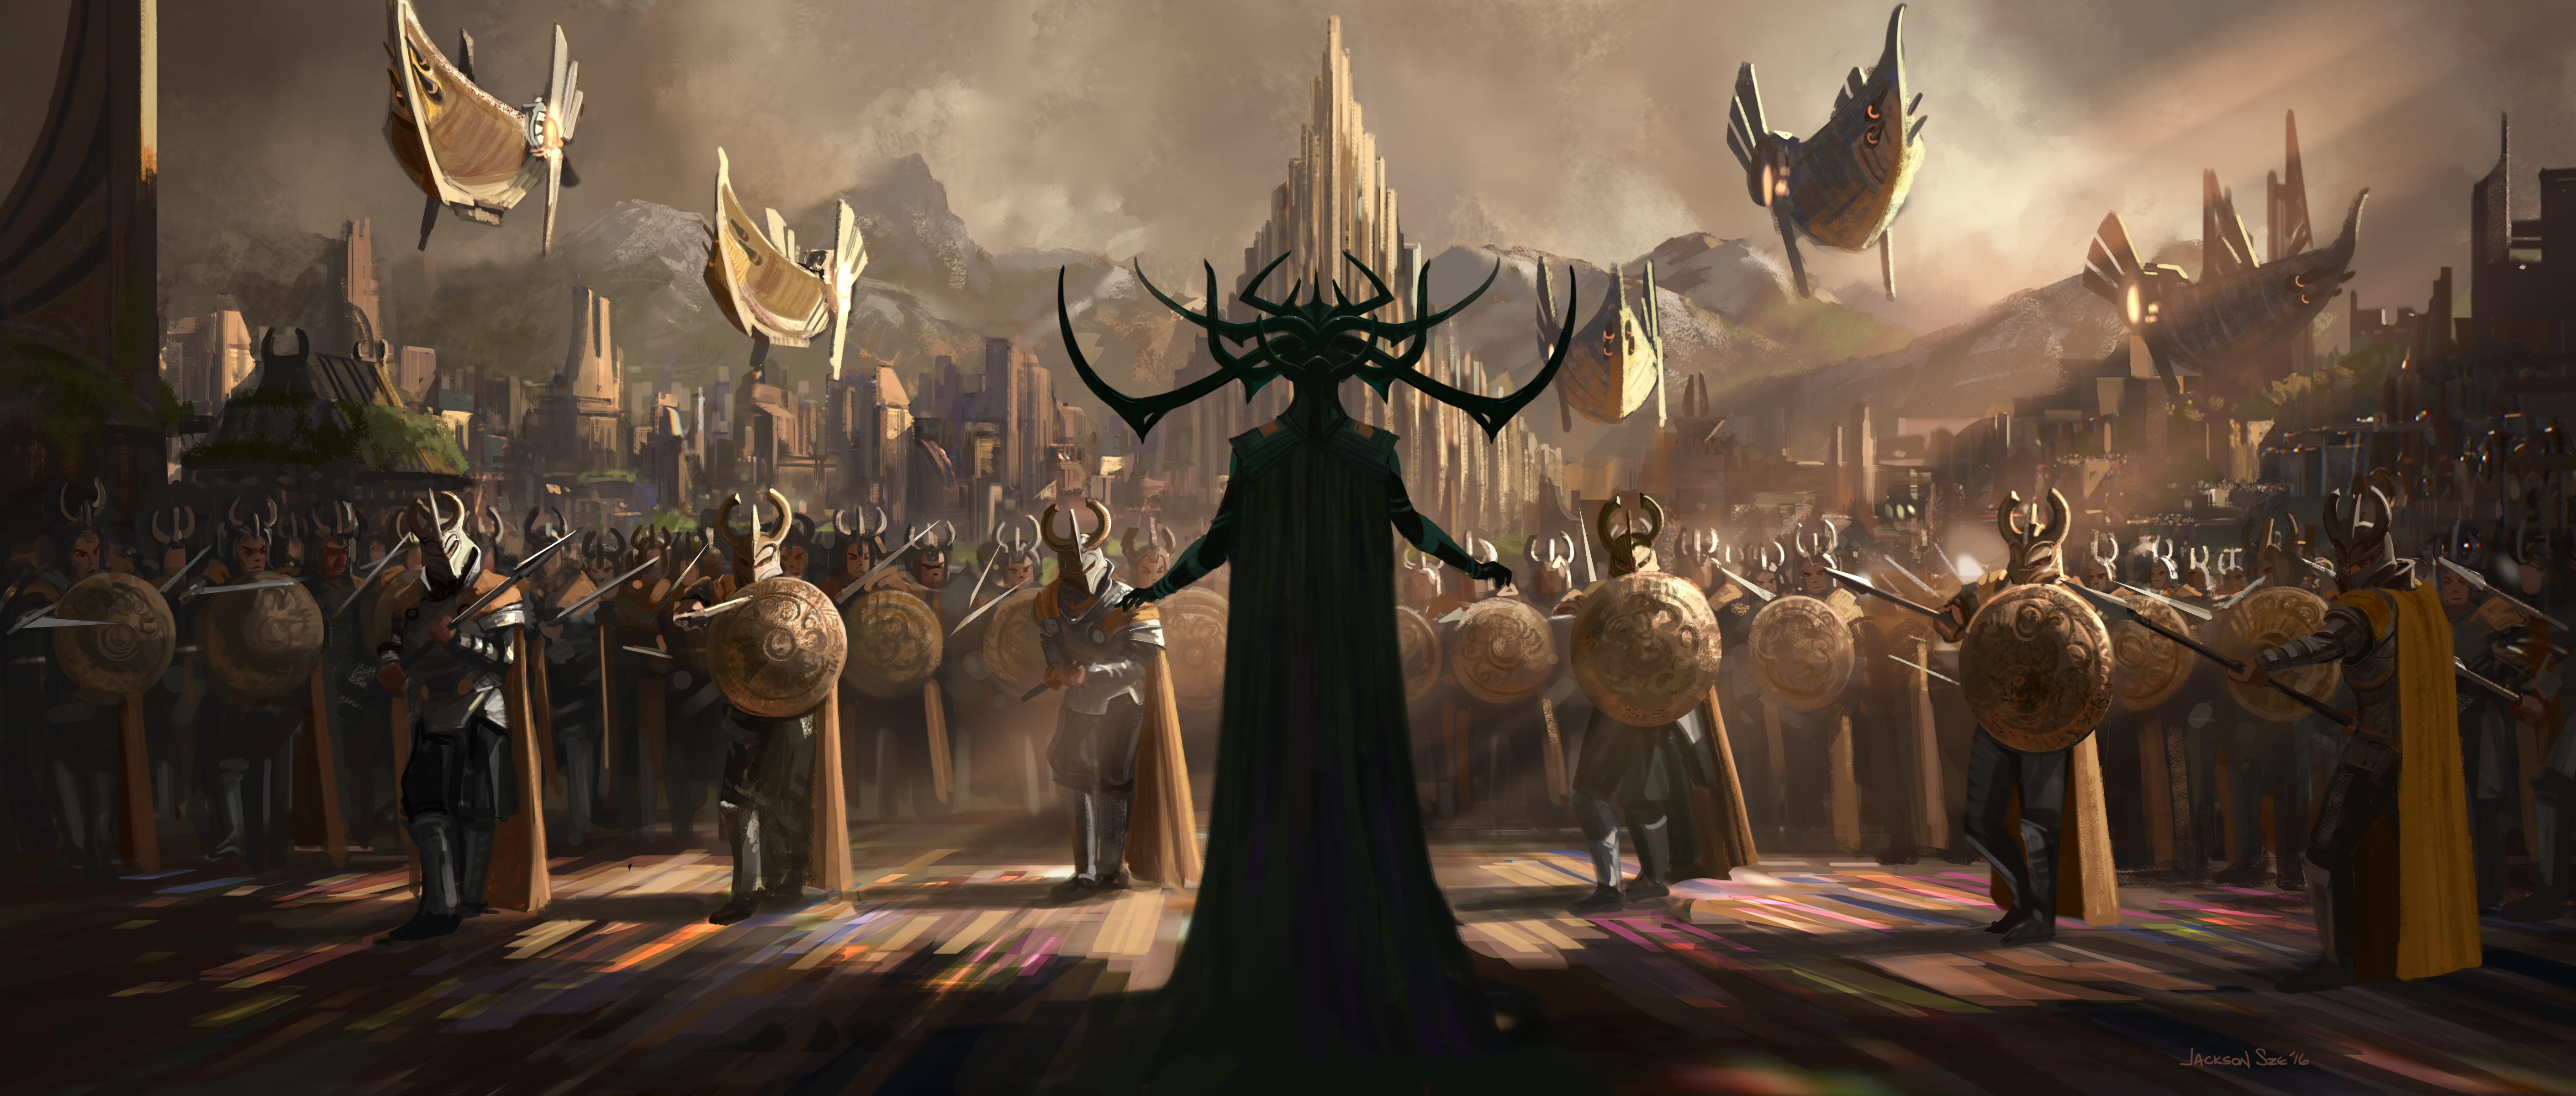 Valkyrie In Thor Ragnarok Wallpapers